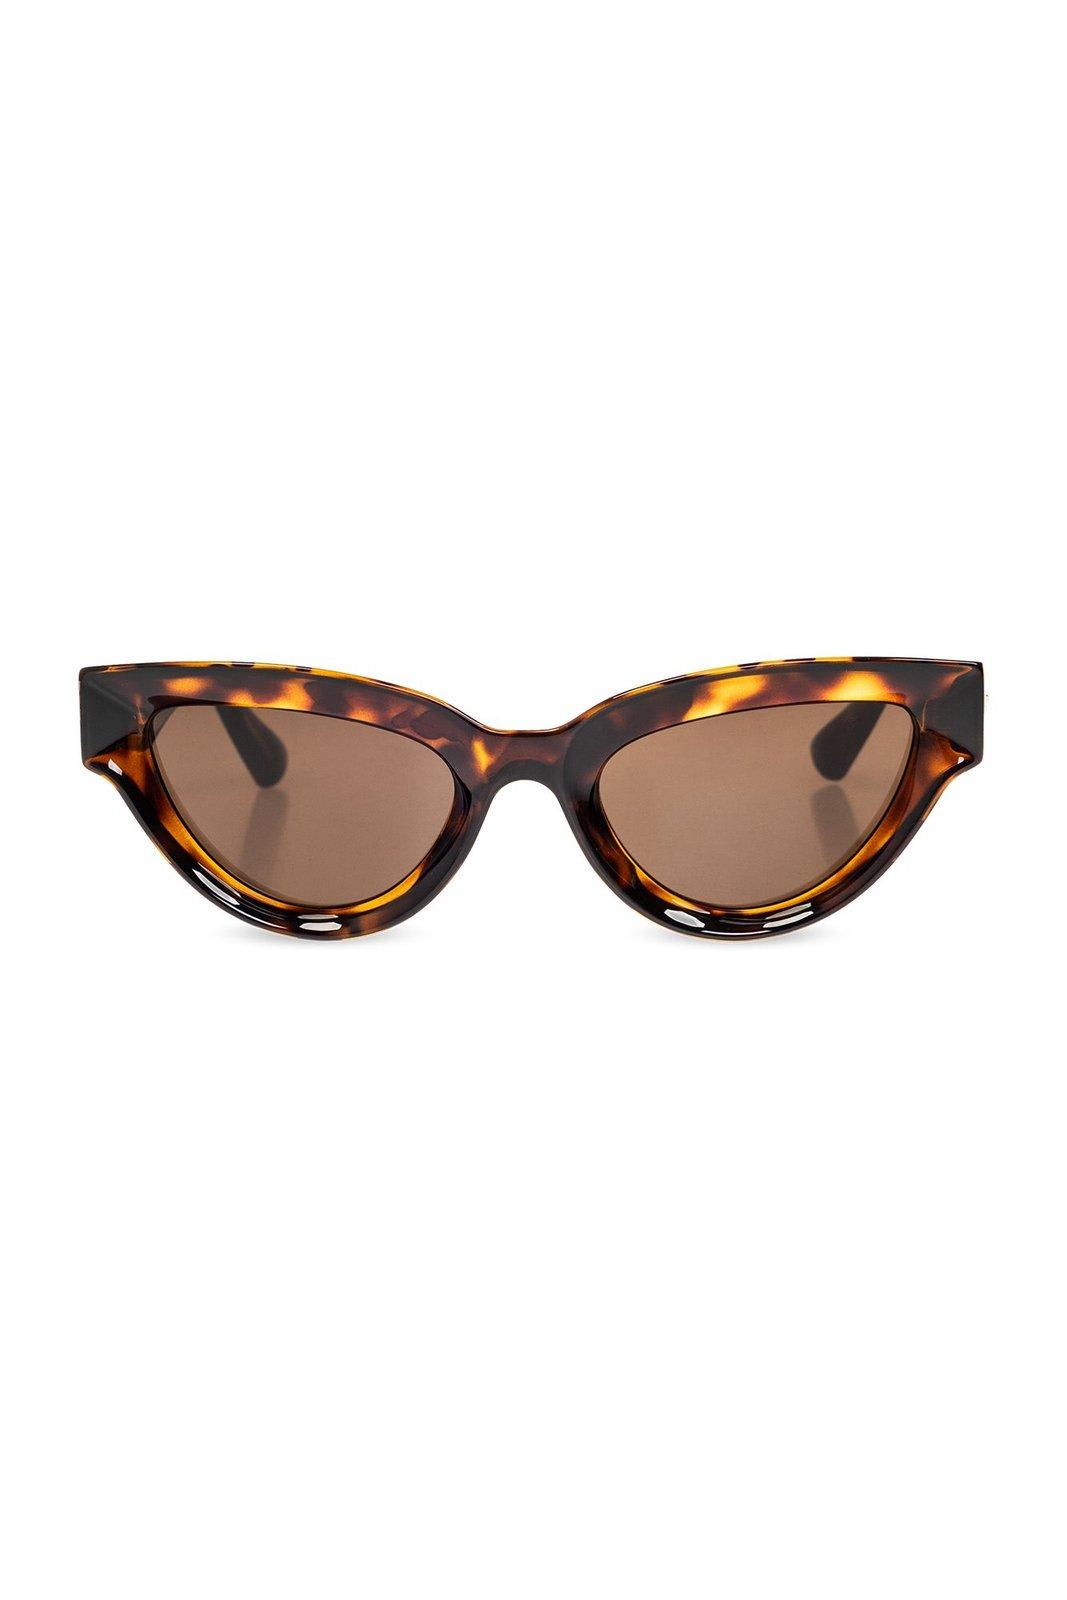 Bottega Veneta Eyewear Cat-Eye Framed Sunglasses